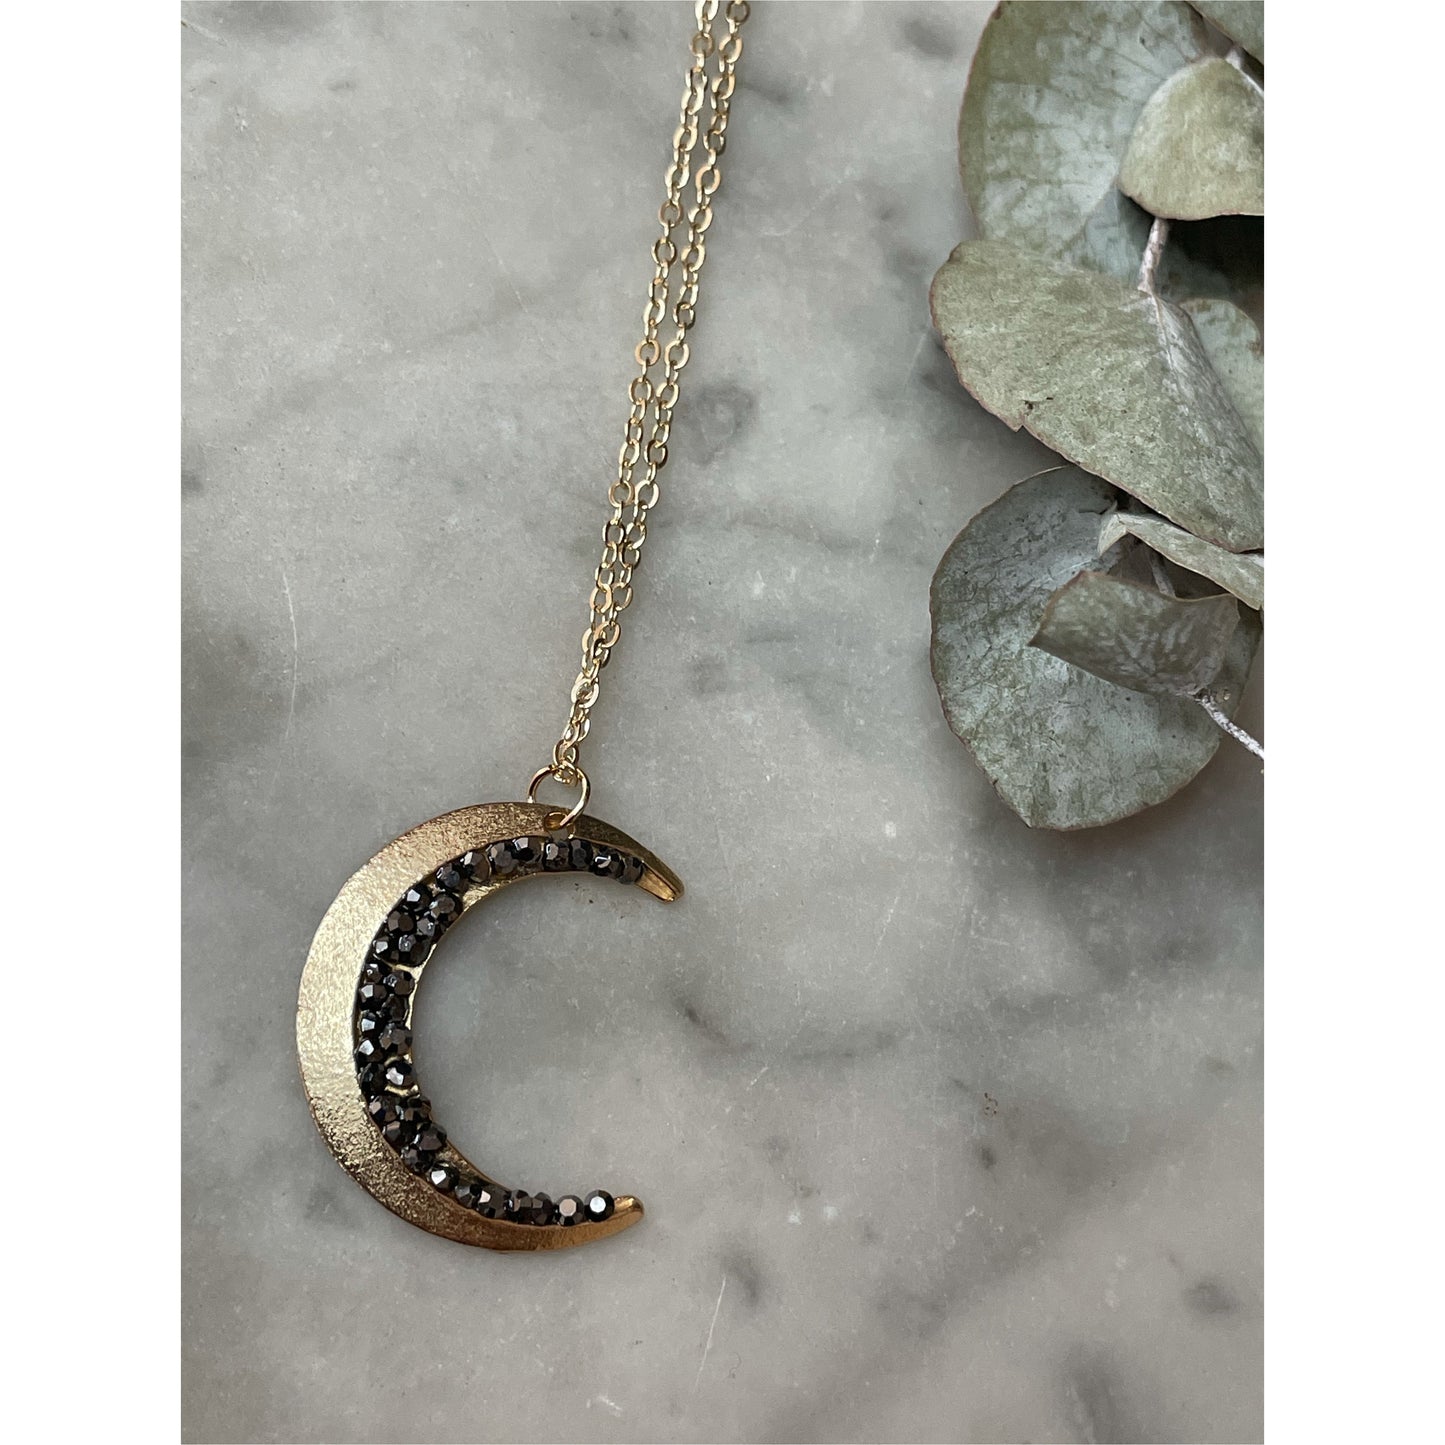 Lorelei Moon Necklace